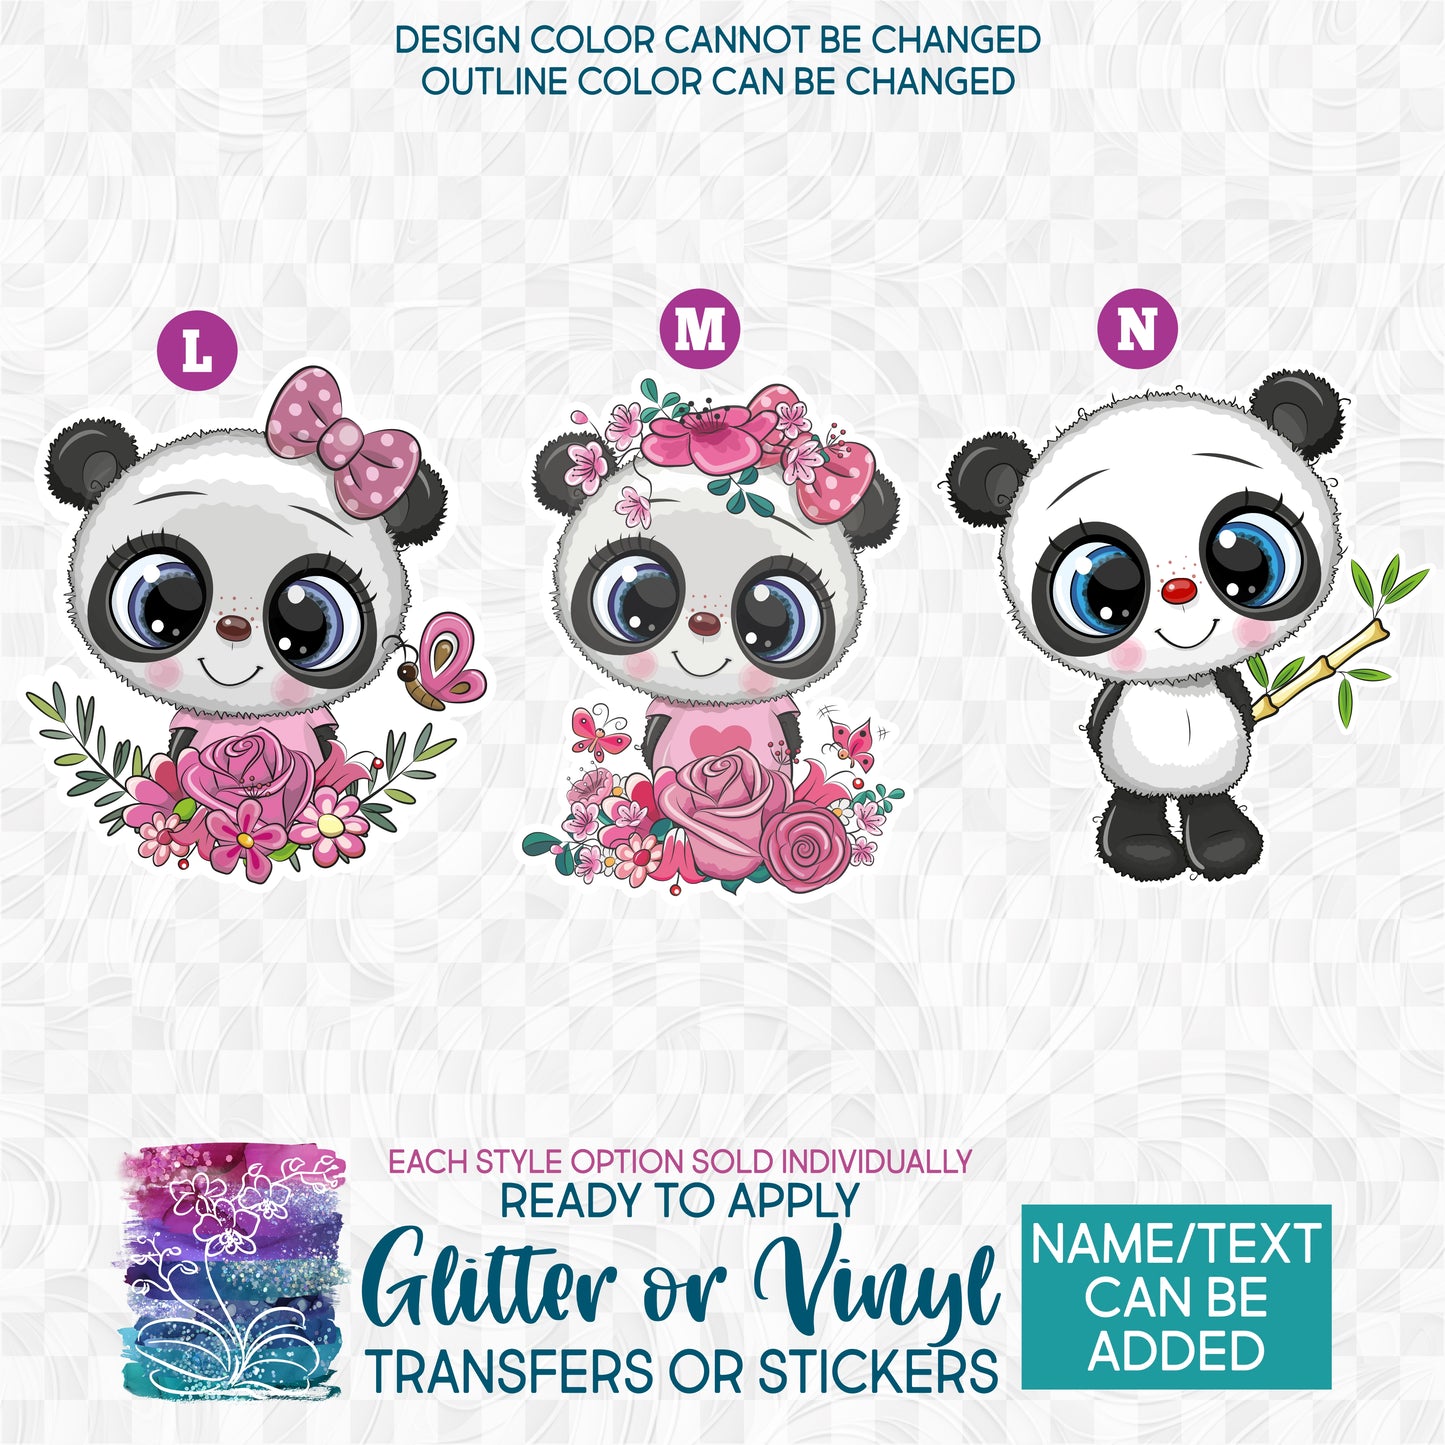 (s133-H) Cute Panda Bear Flowers Bamboo Glitter or Vinyl Iron-On Transfer or Sticker